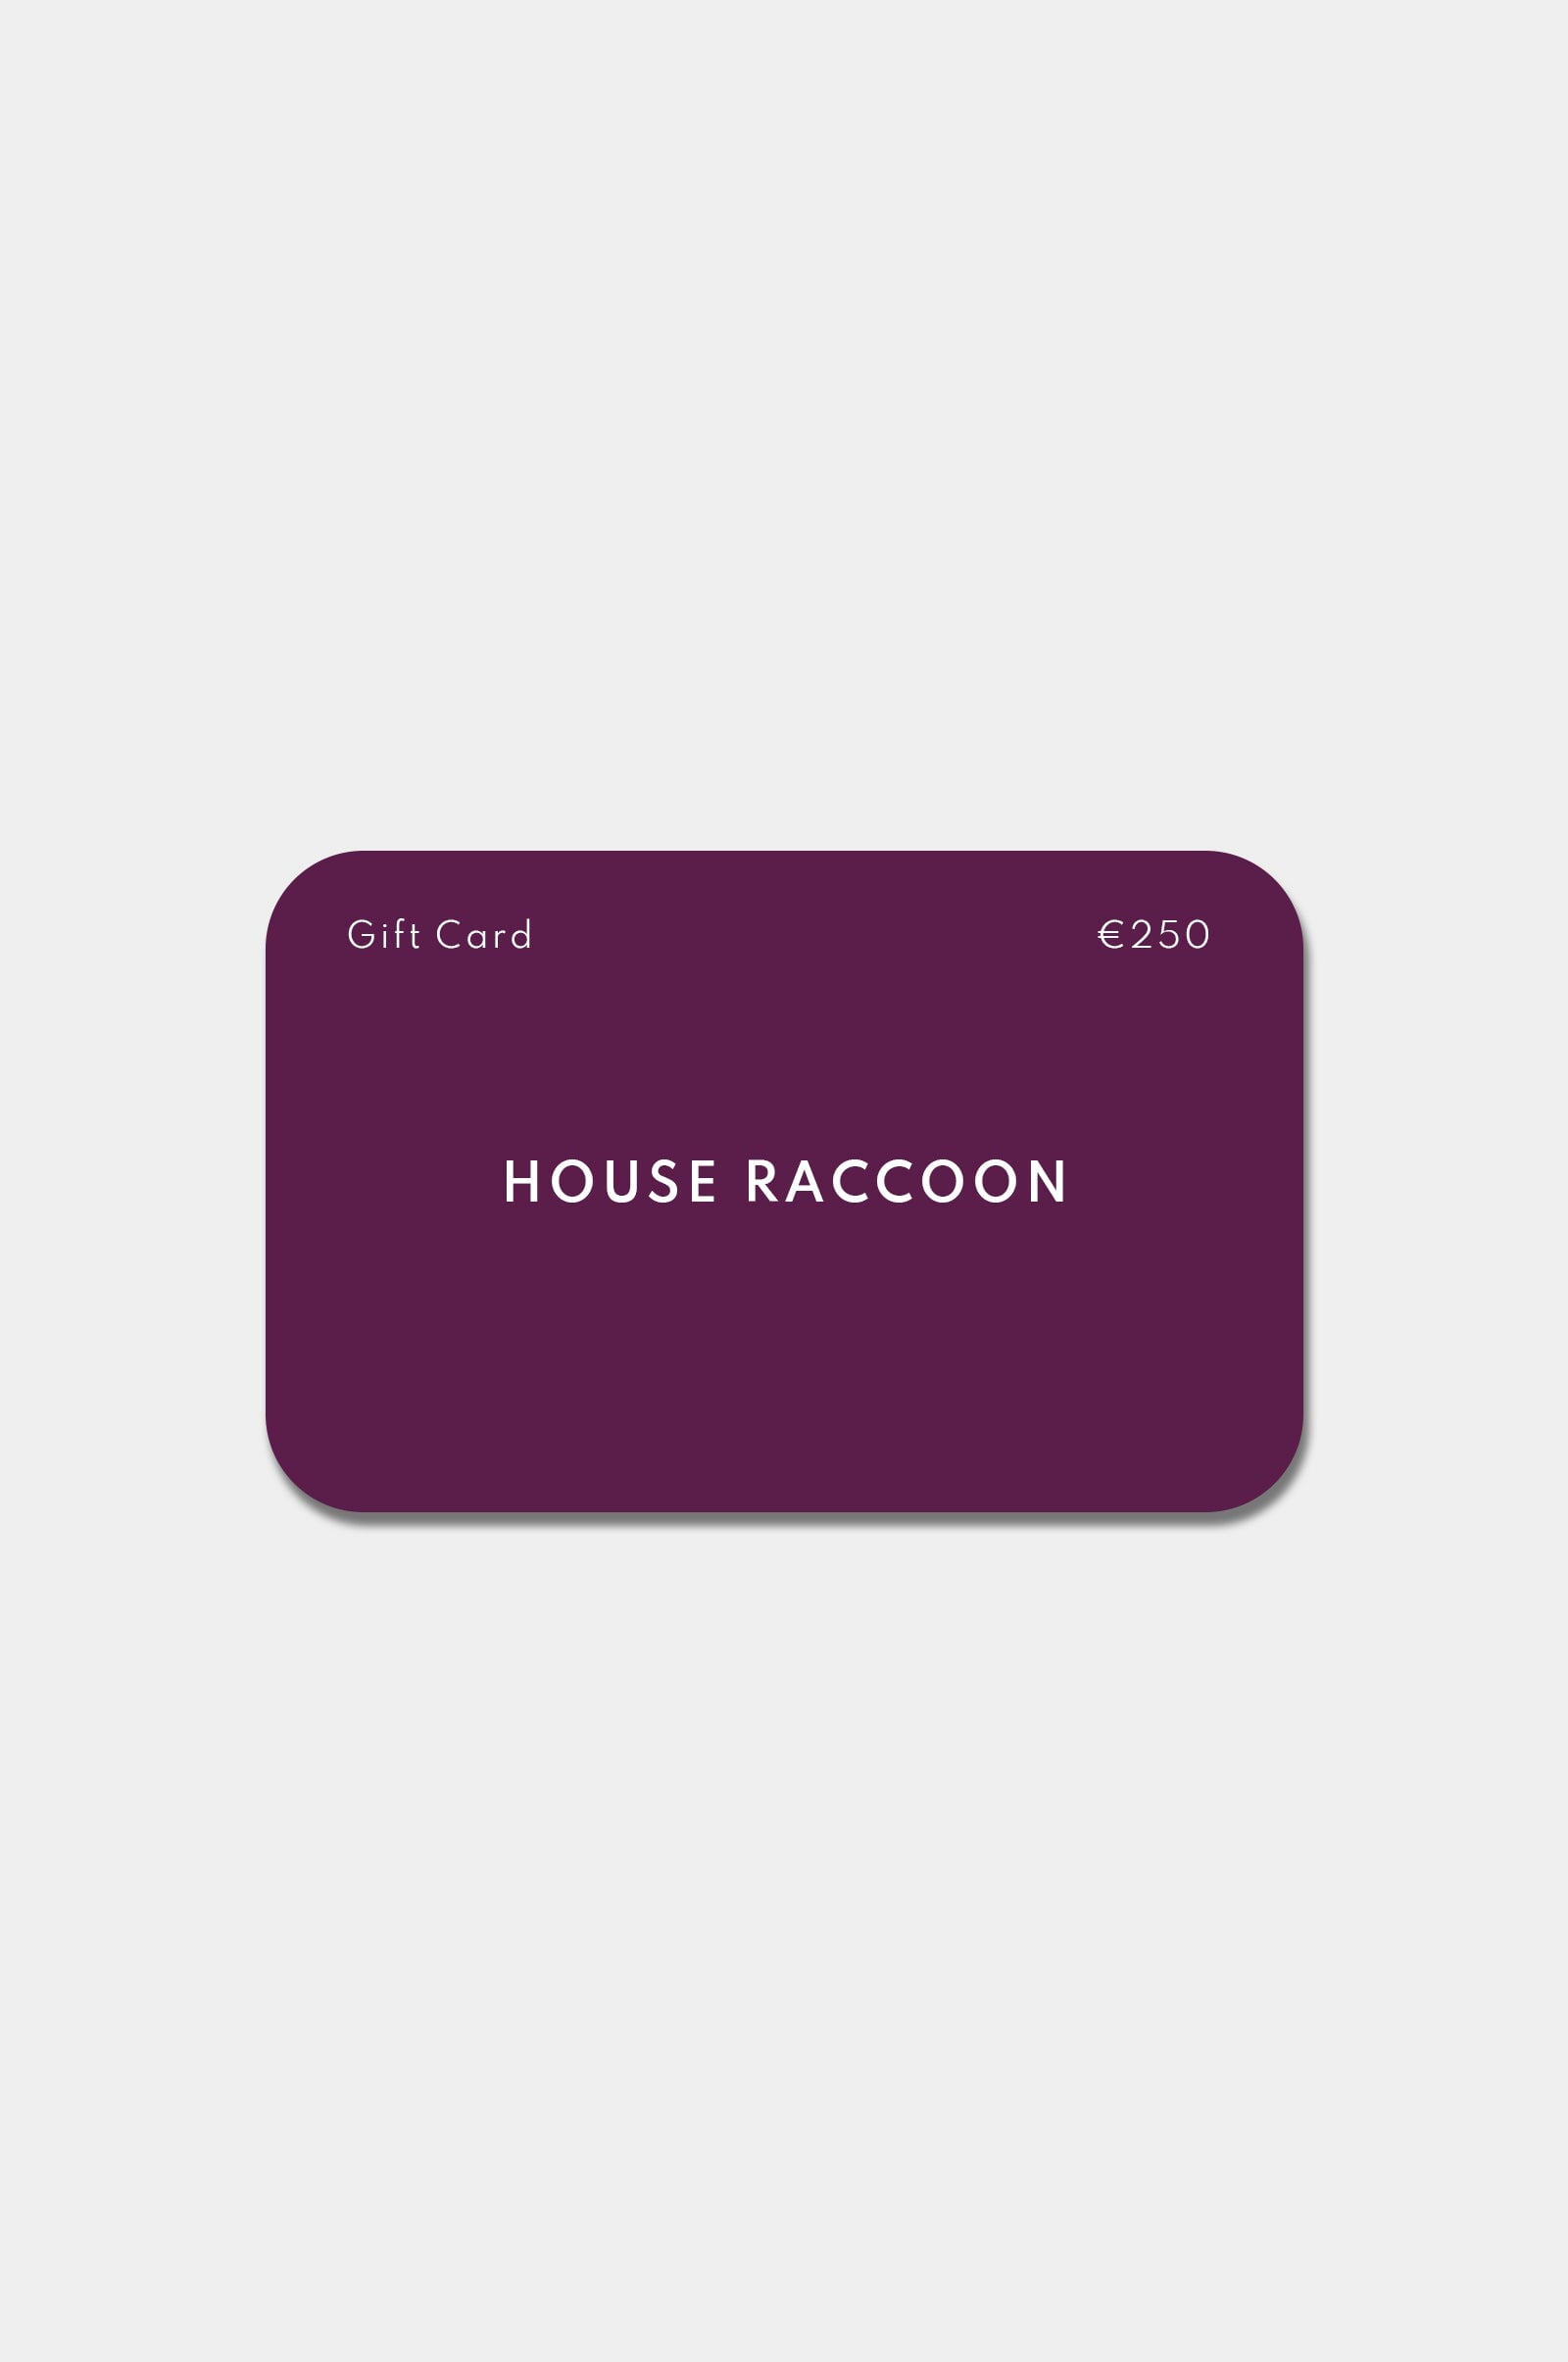 Geschenkgutschein House Raccoon Geschenkgutschein House Raccoon €250.00 